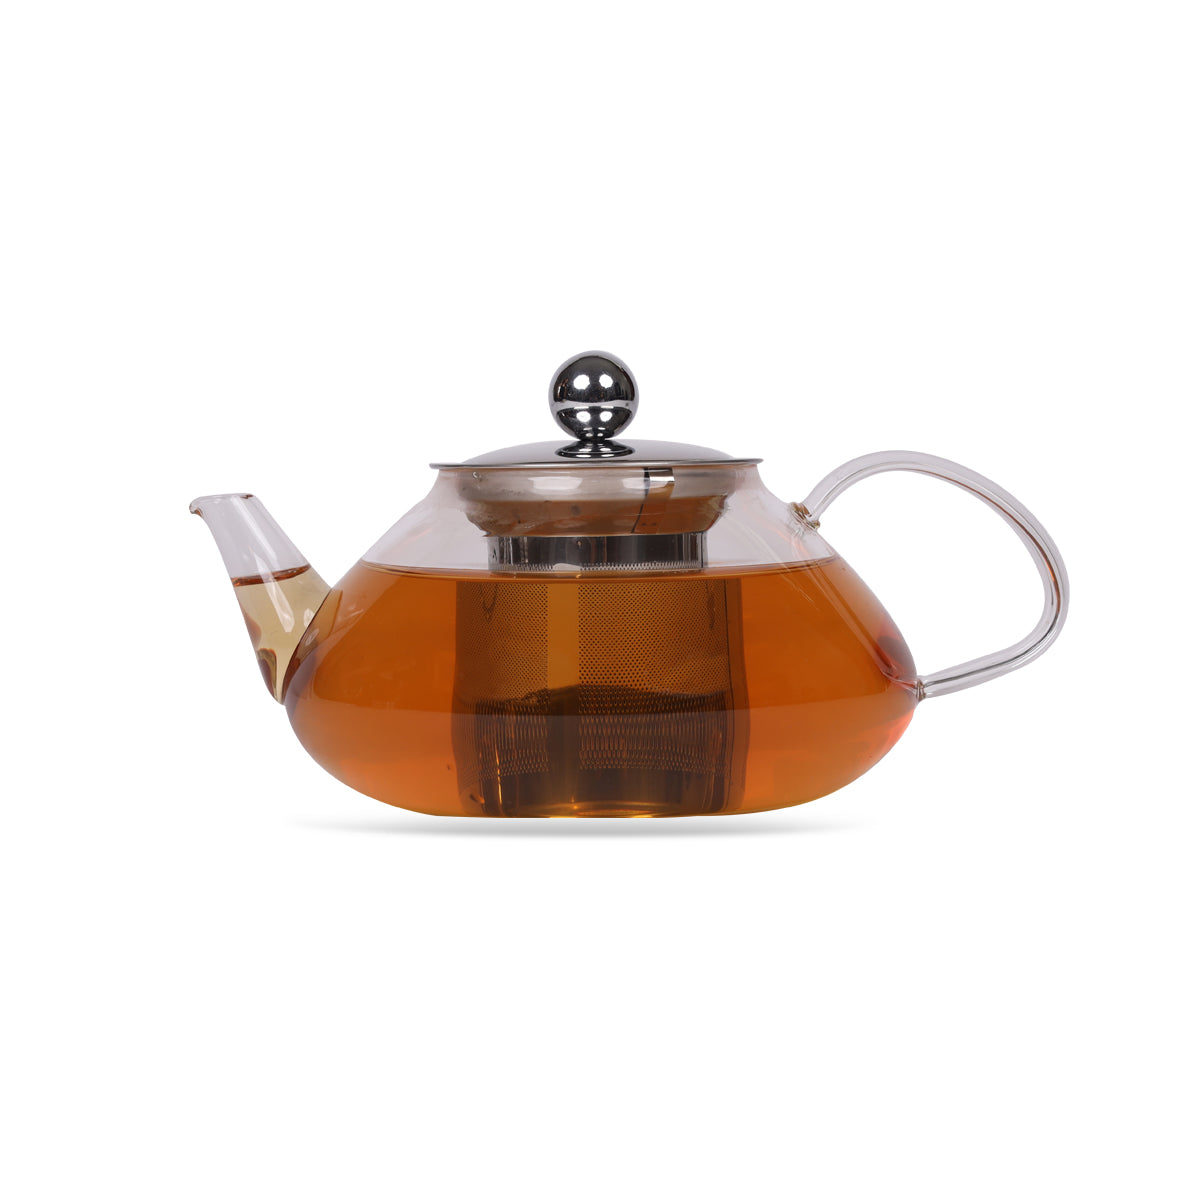 buy tea pot online, glass tea pot with infuser, glass tea kettle, 